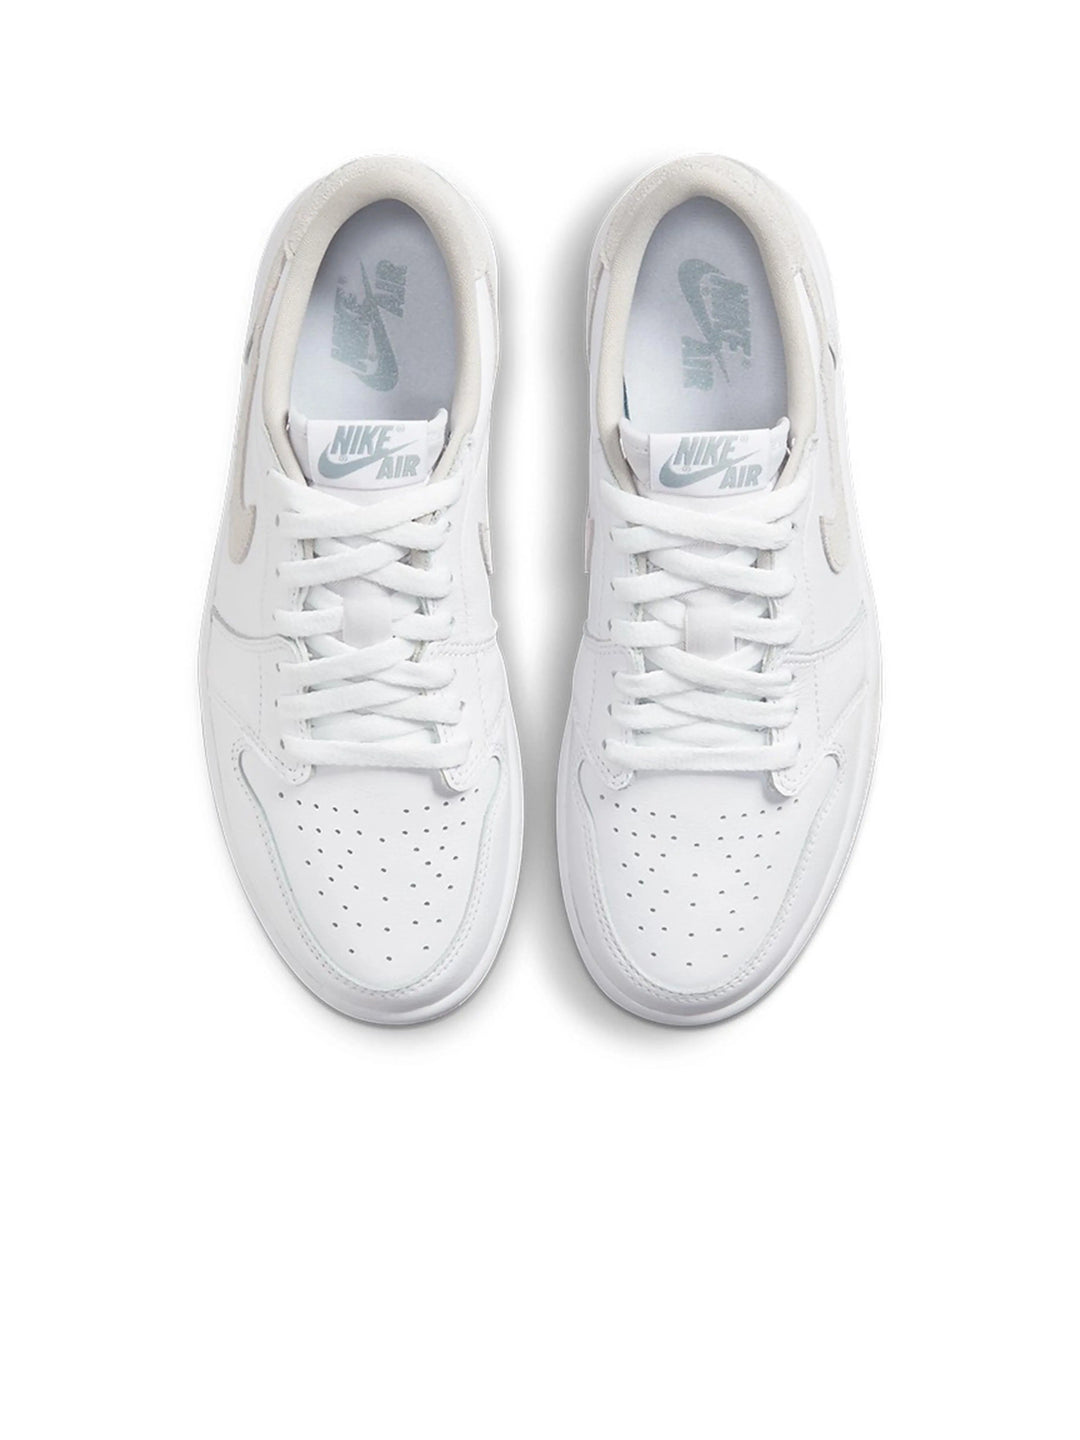 Nike Air Jordan 1 Low OG Neutral Grey [2021] [W] Prior